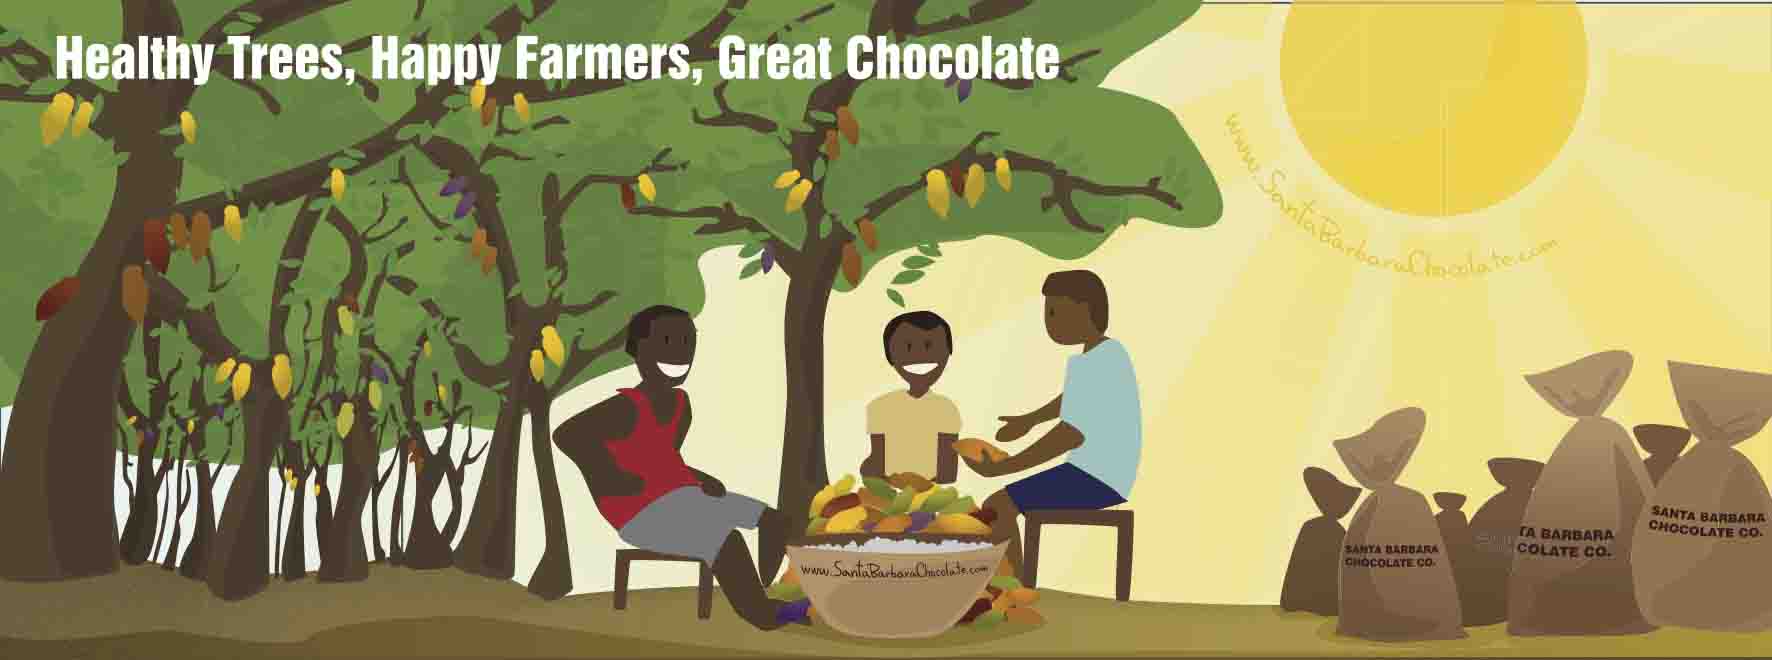 healthy-trees-happy-farmers-great-chocolate.jpg